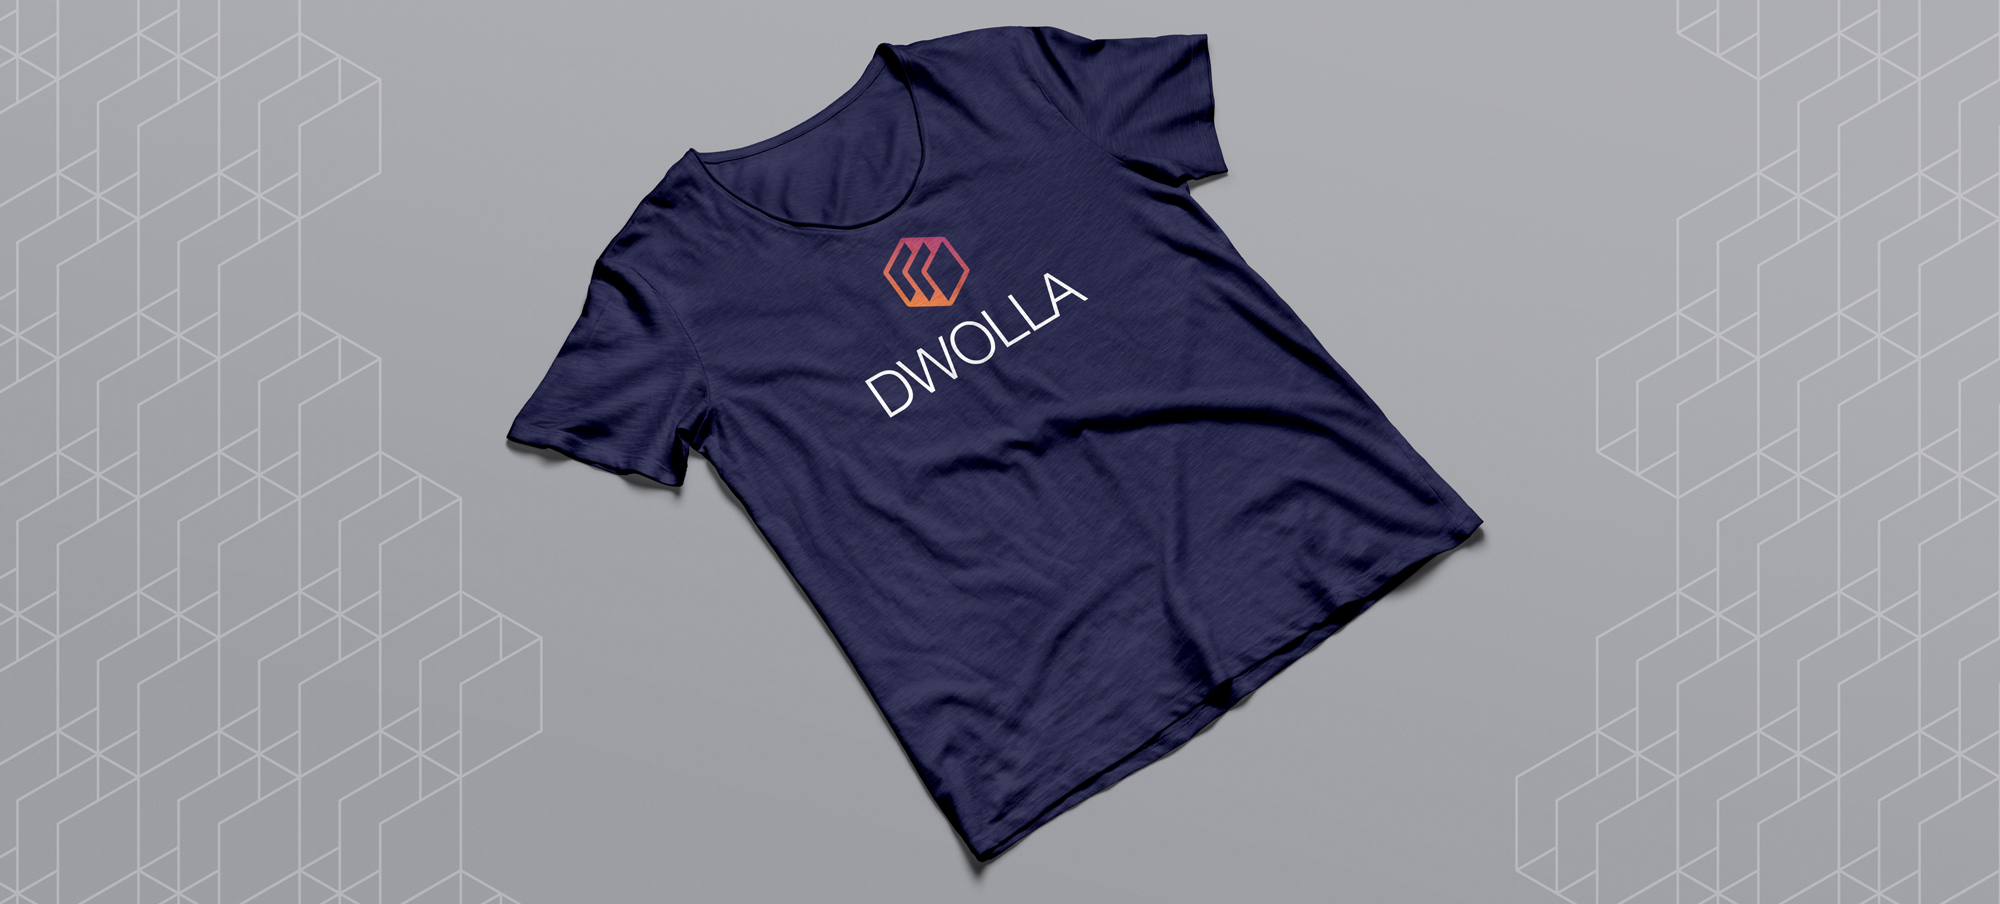 dwolla-logo-t-shirt-mockup-02-v2